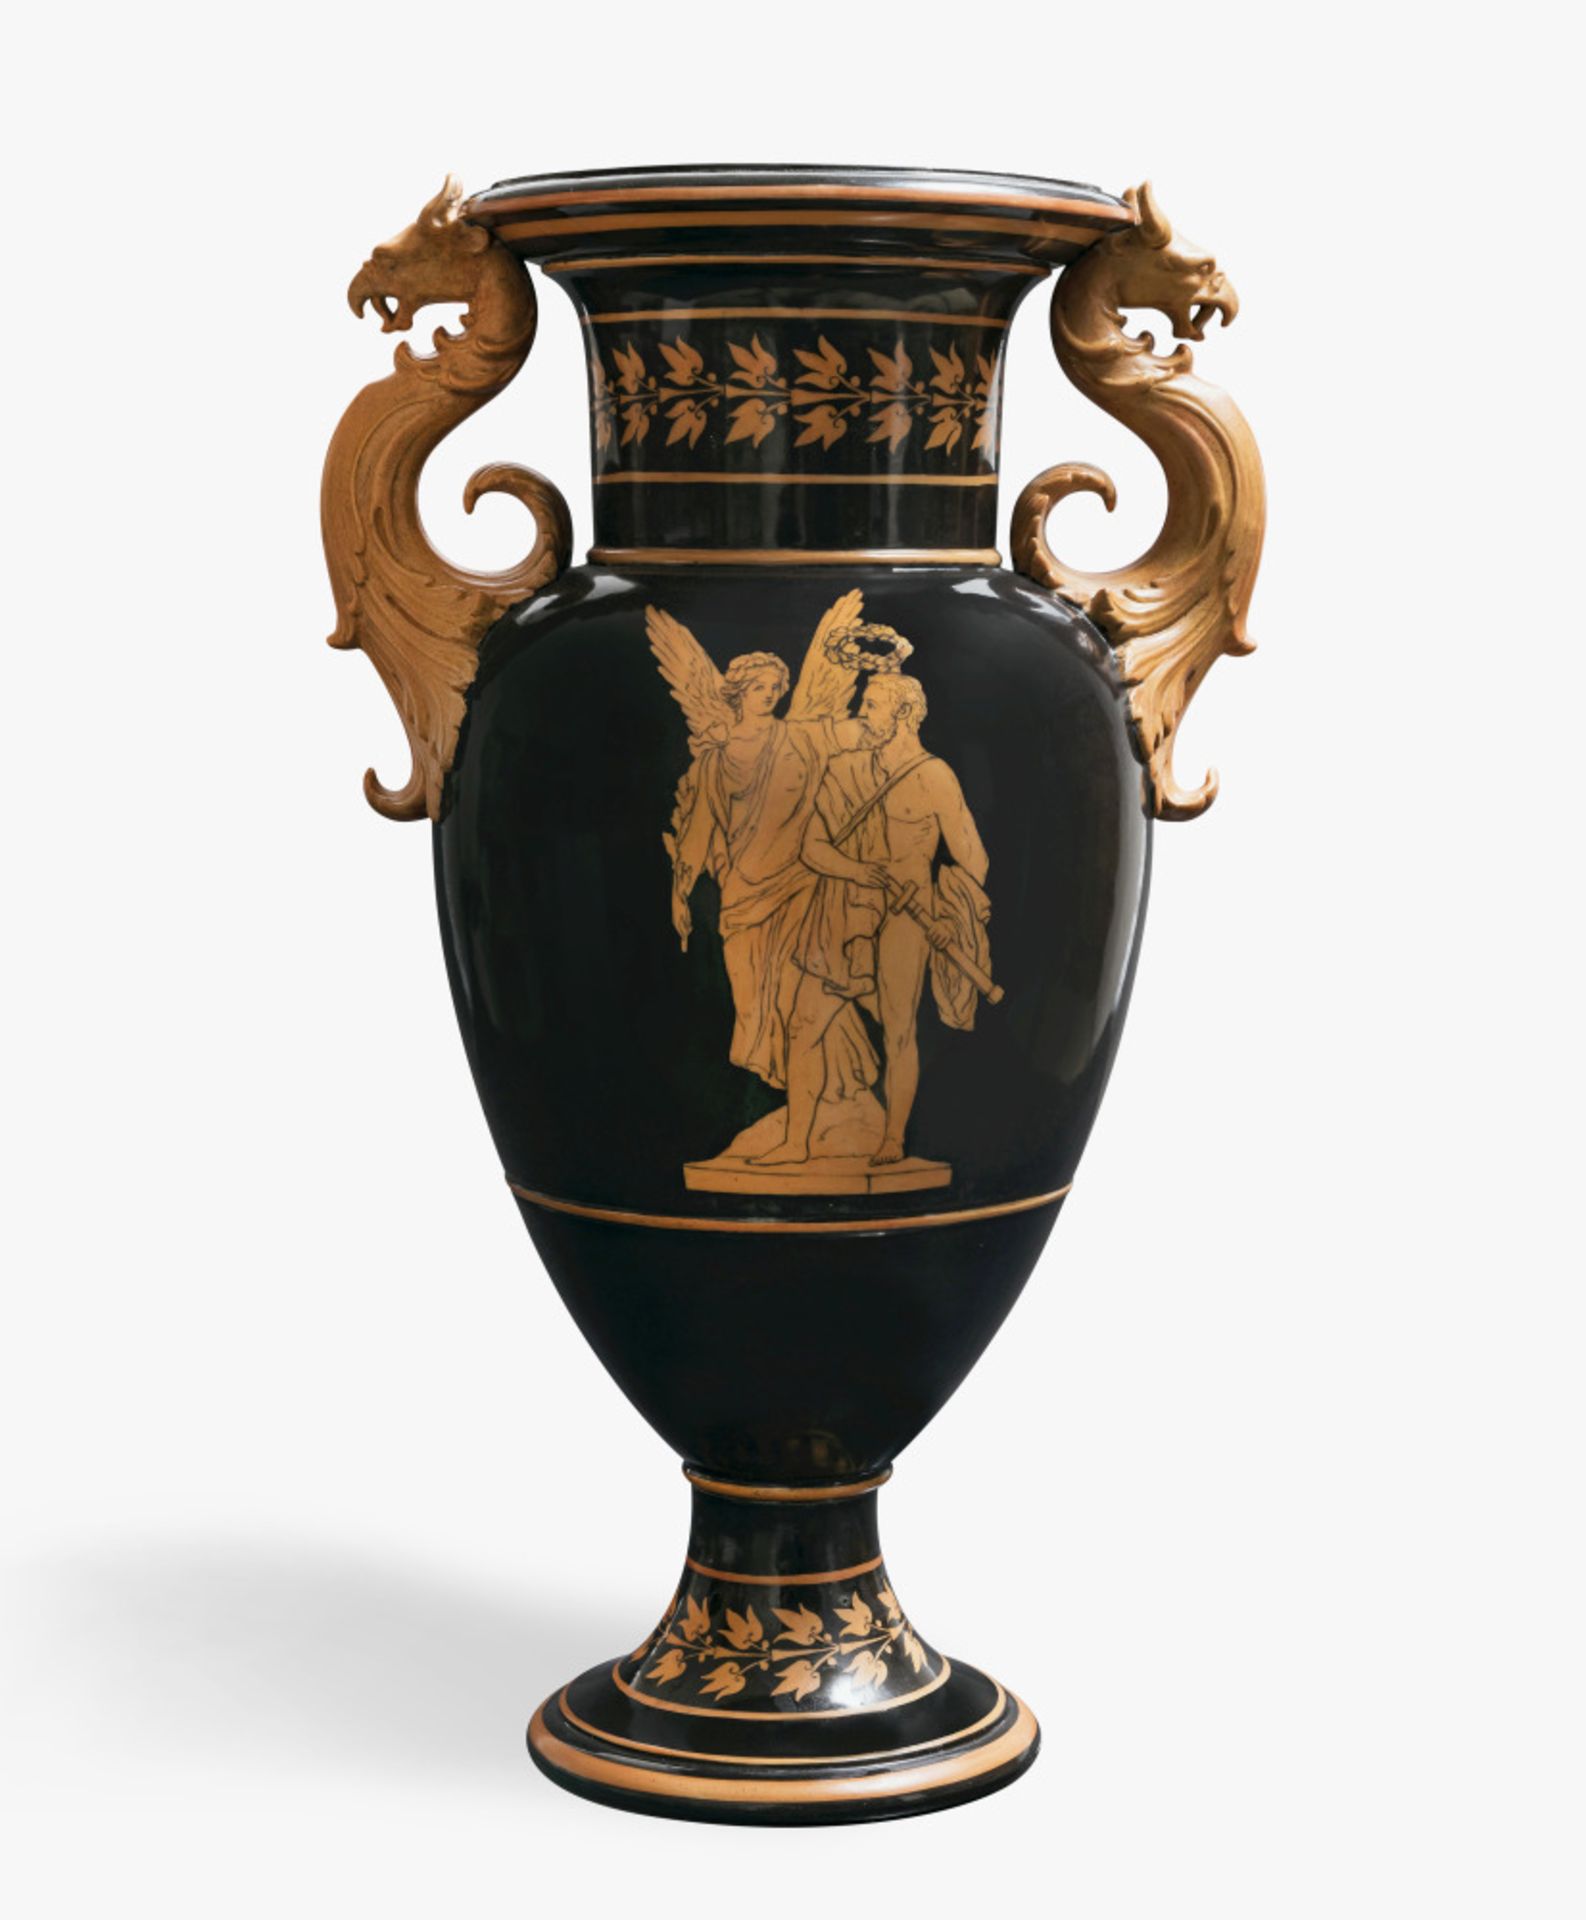 An Amphora vase "Nike crowns the winner" - KPM Berlin, 1849 - 1870, motif after Friedrich Drake